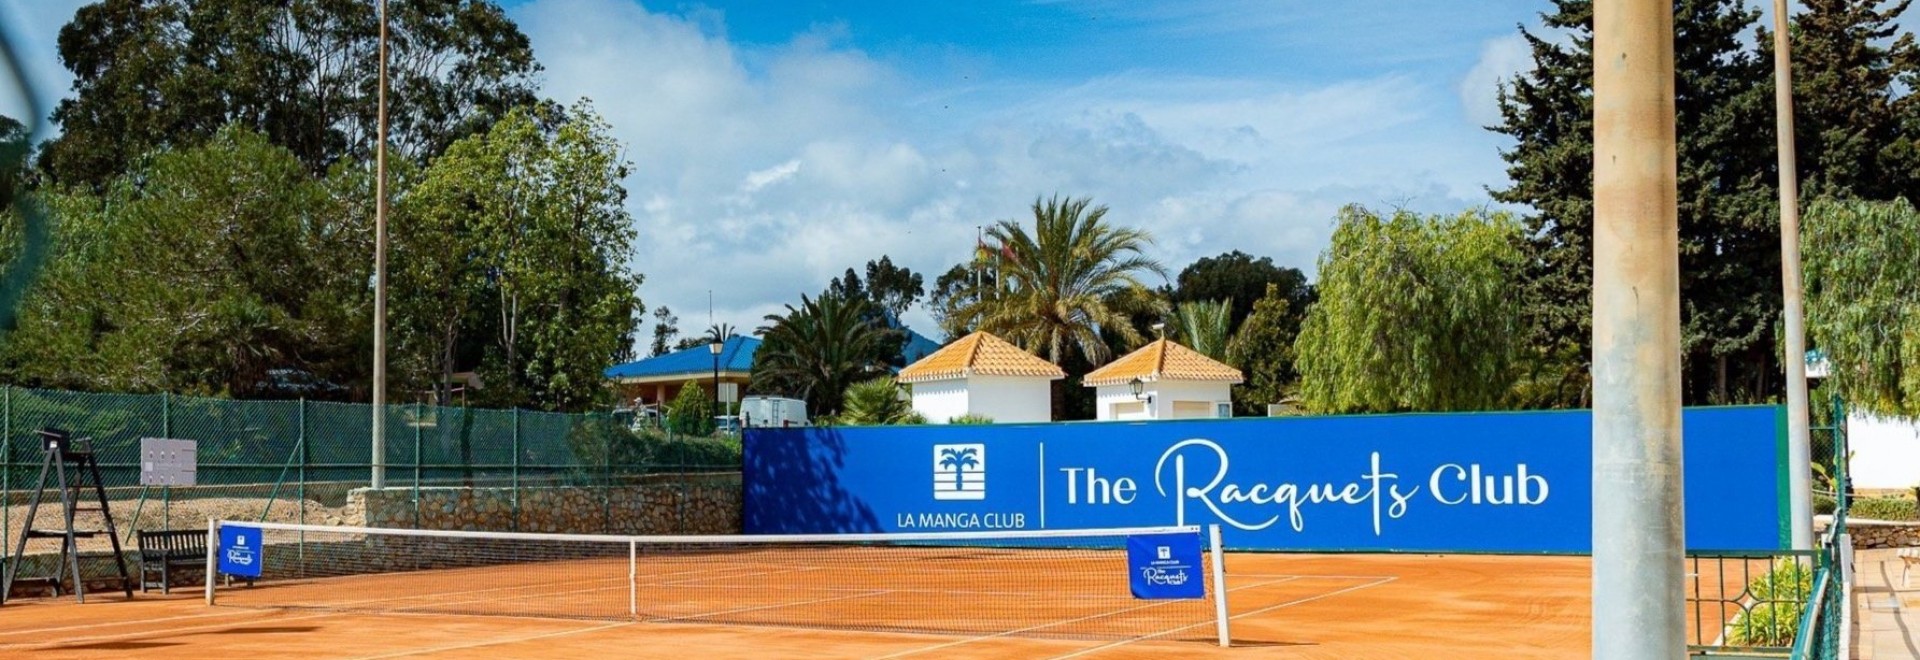 The Racquets Club at La Manga, Spain - Book. Travel. Play.